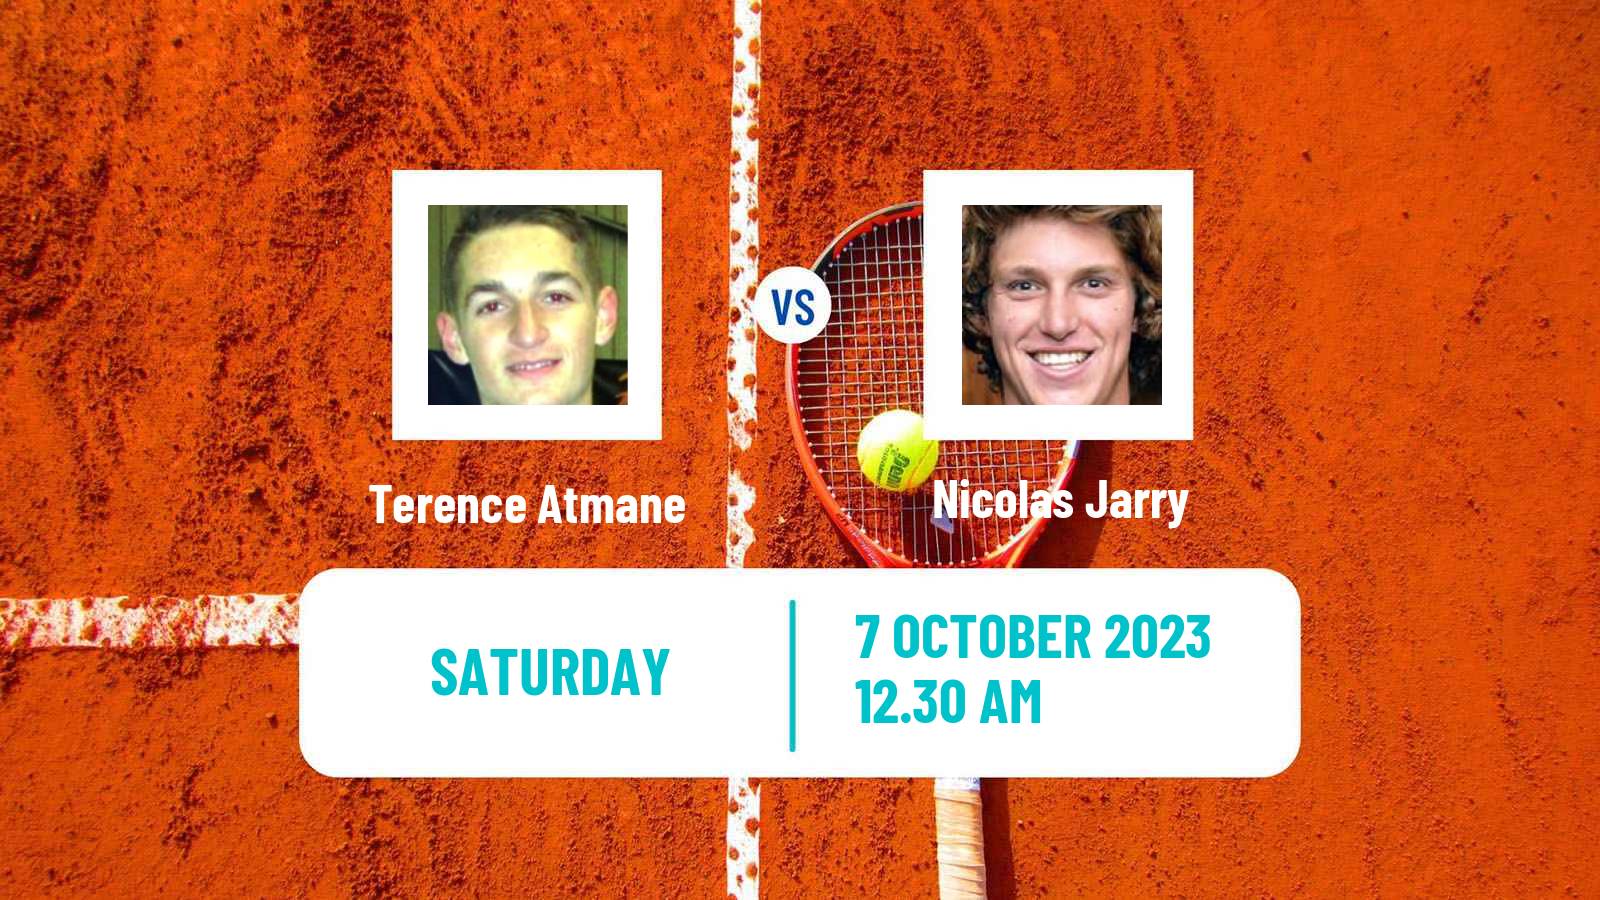 Tennis ATP Shanghai Terence Atmane - Nicolas Jarry